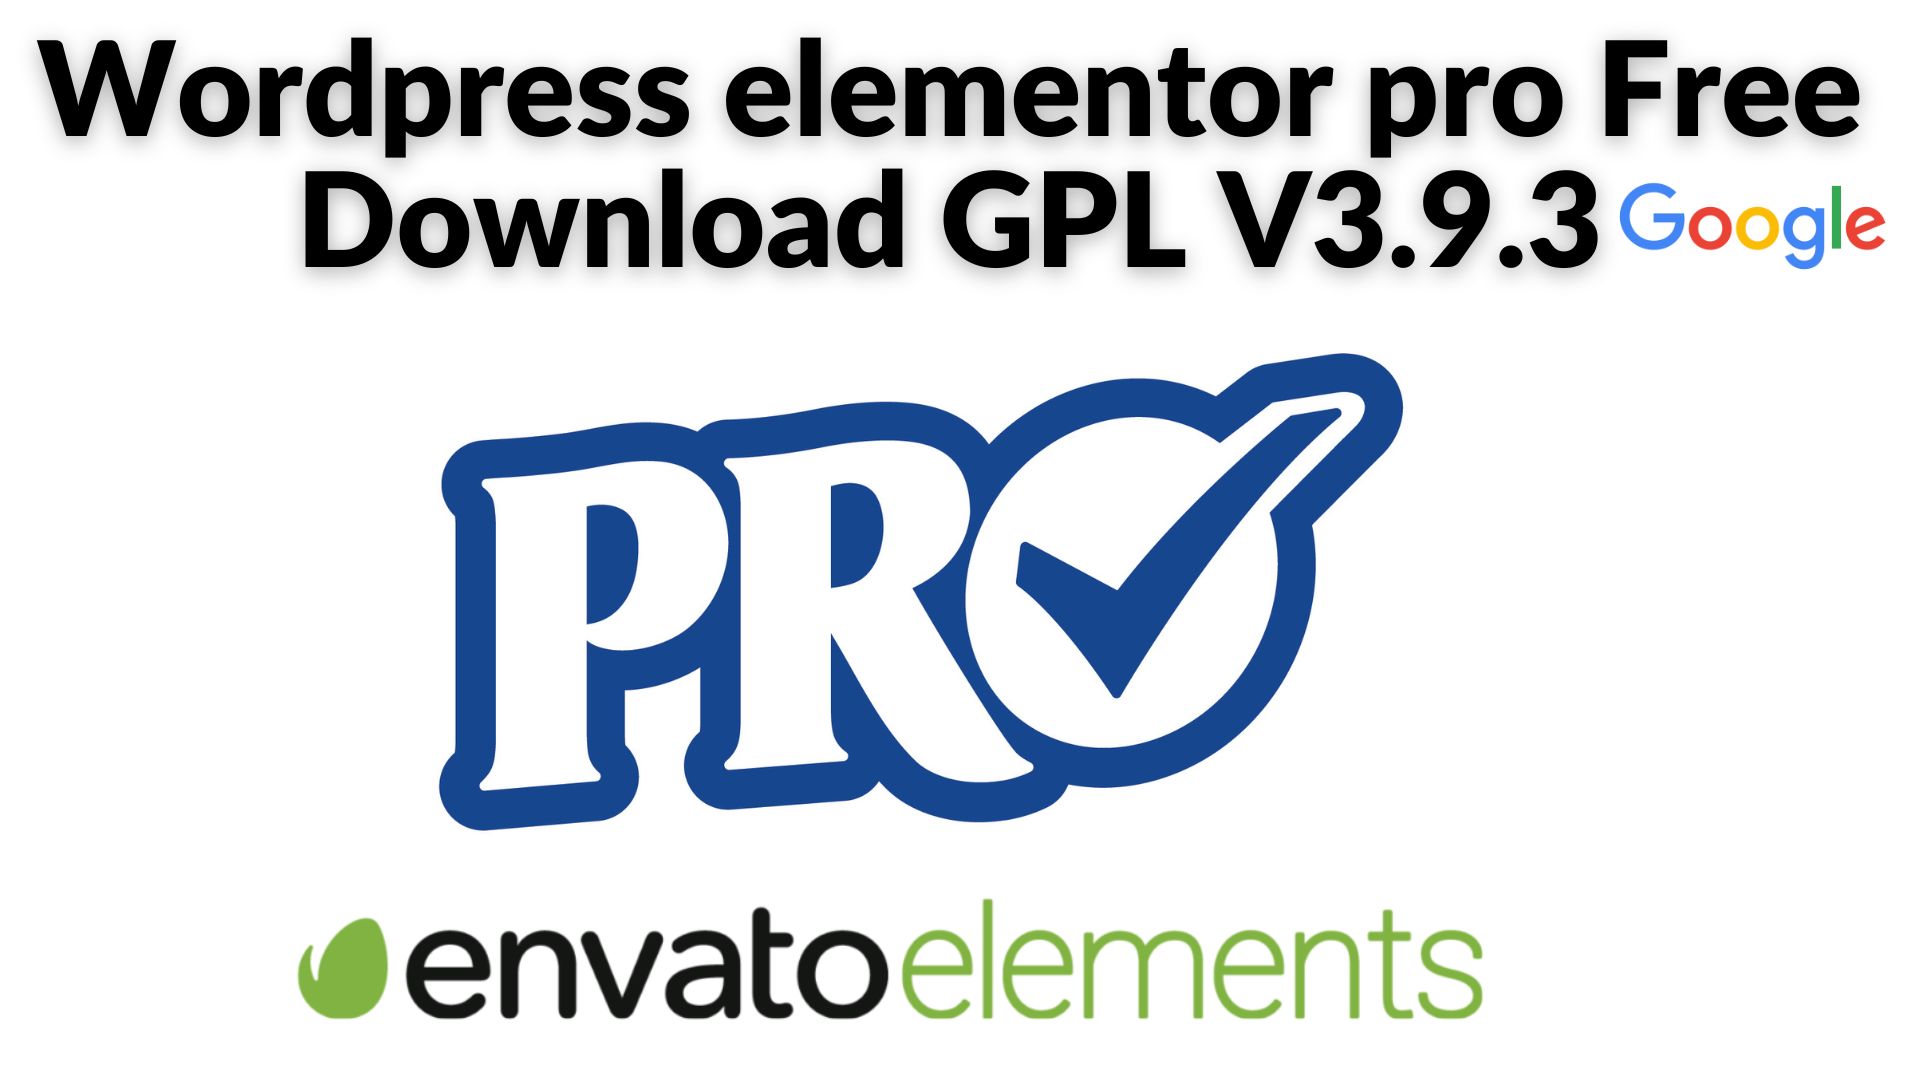 Wordpress elementor pro free download gpl v3. 9. 3